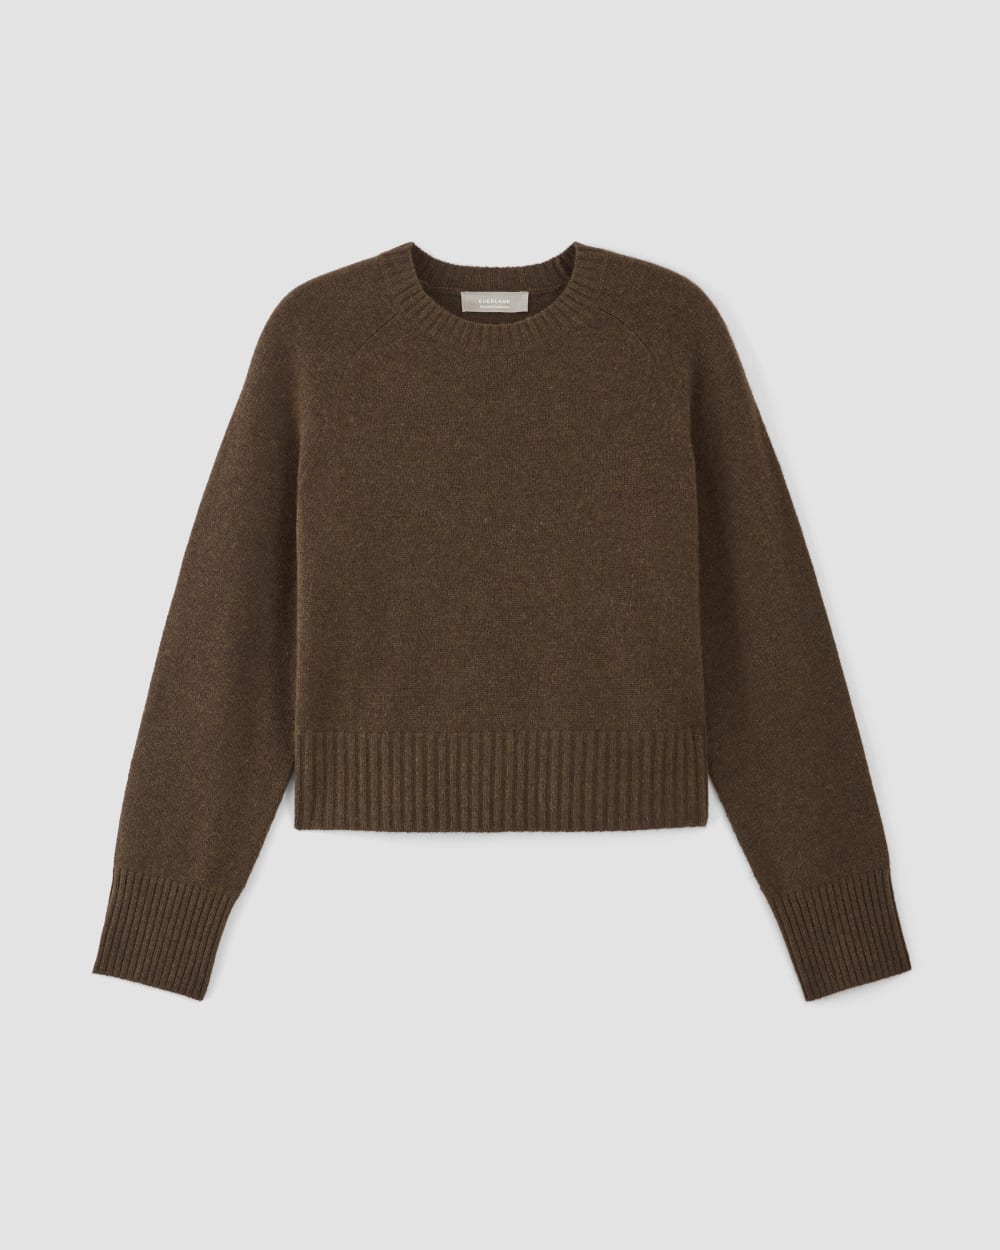 The Cashmere Boxy Crew Sweater Black – Everlane